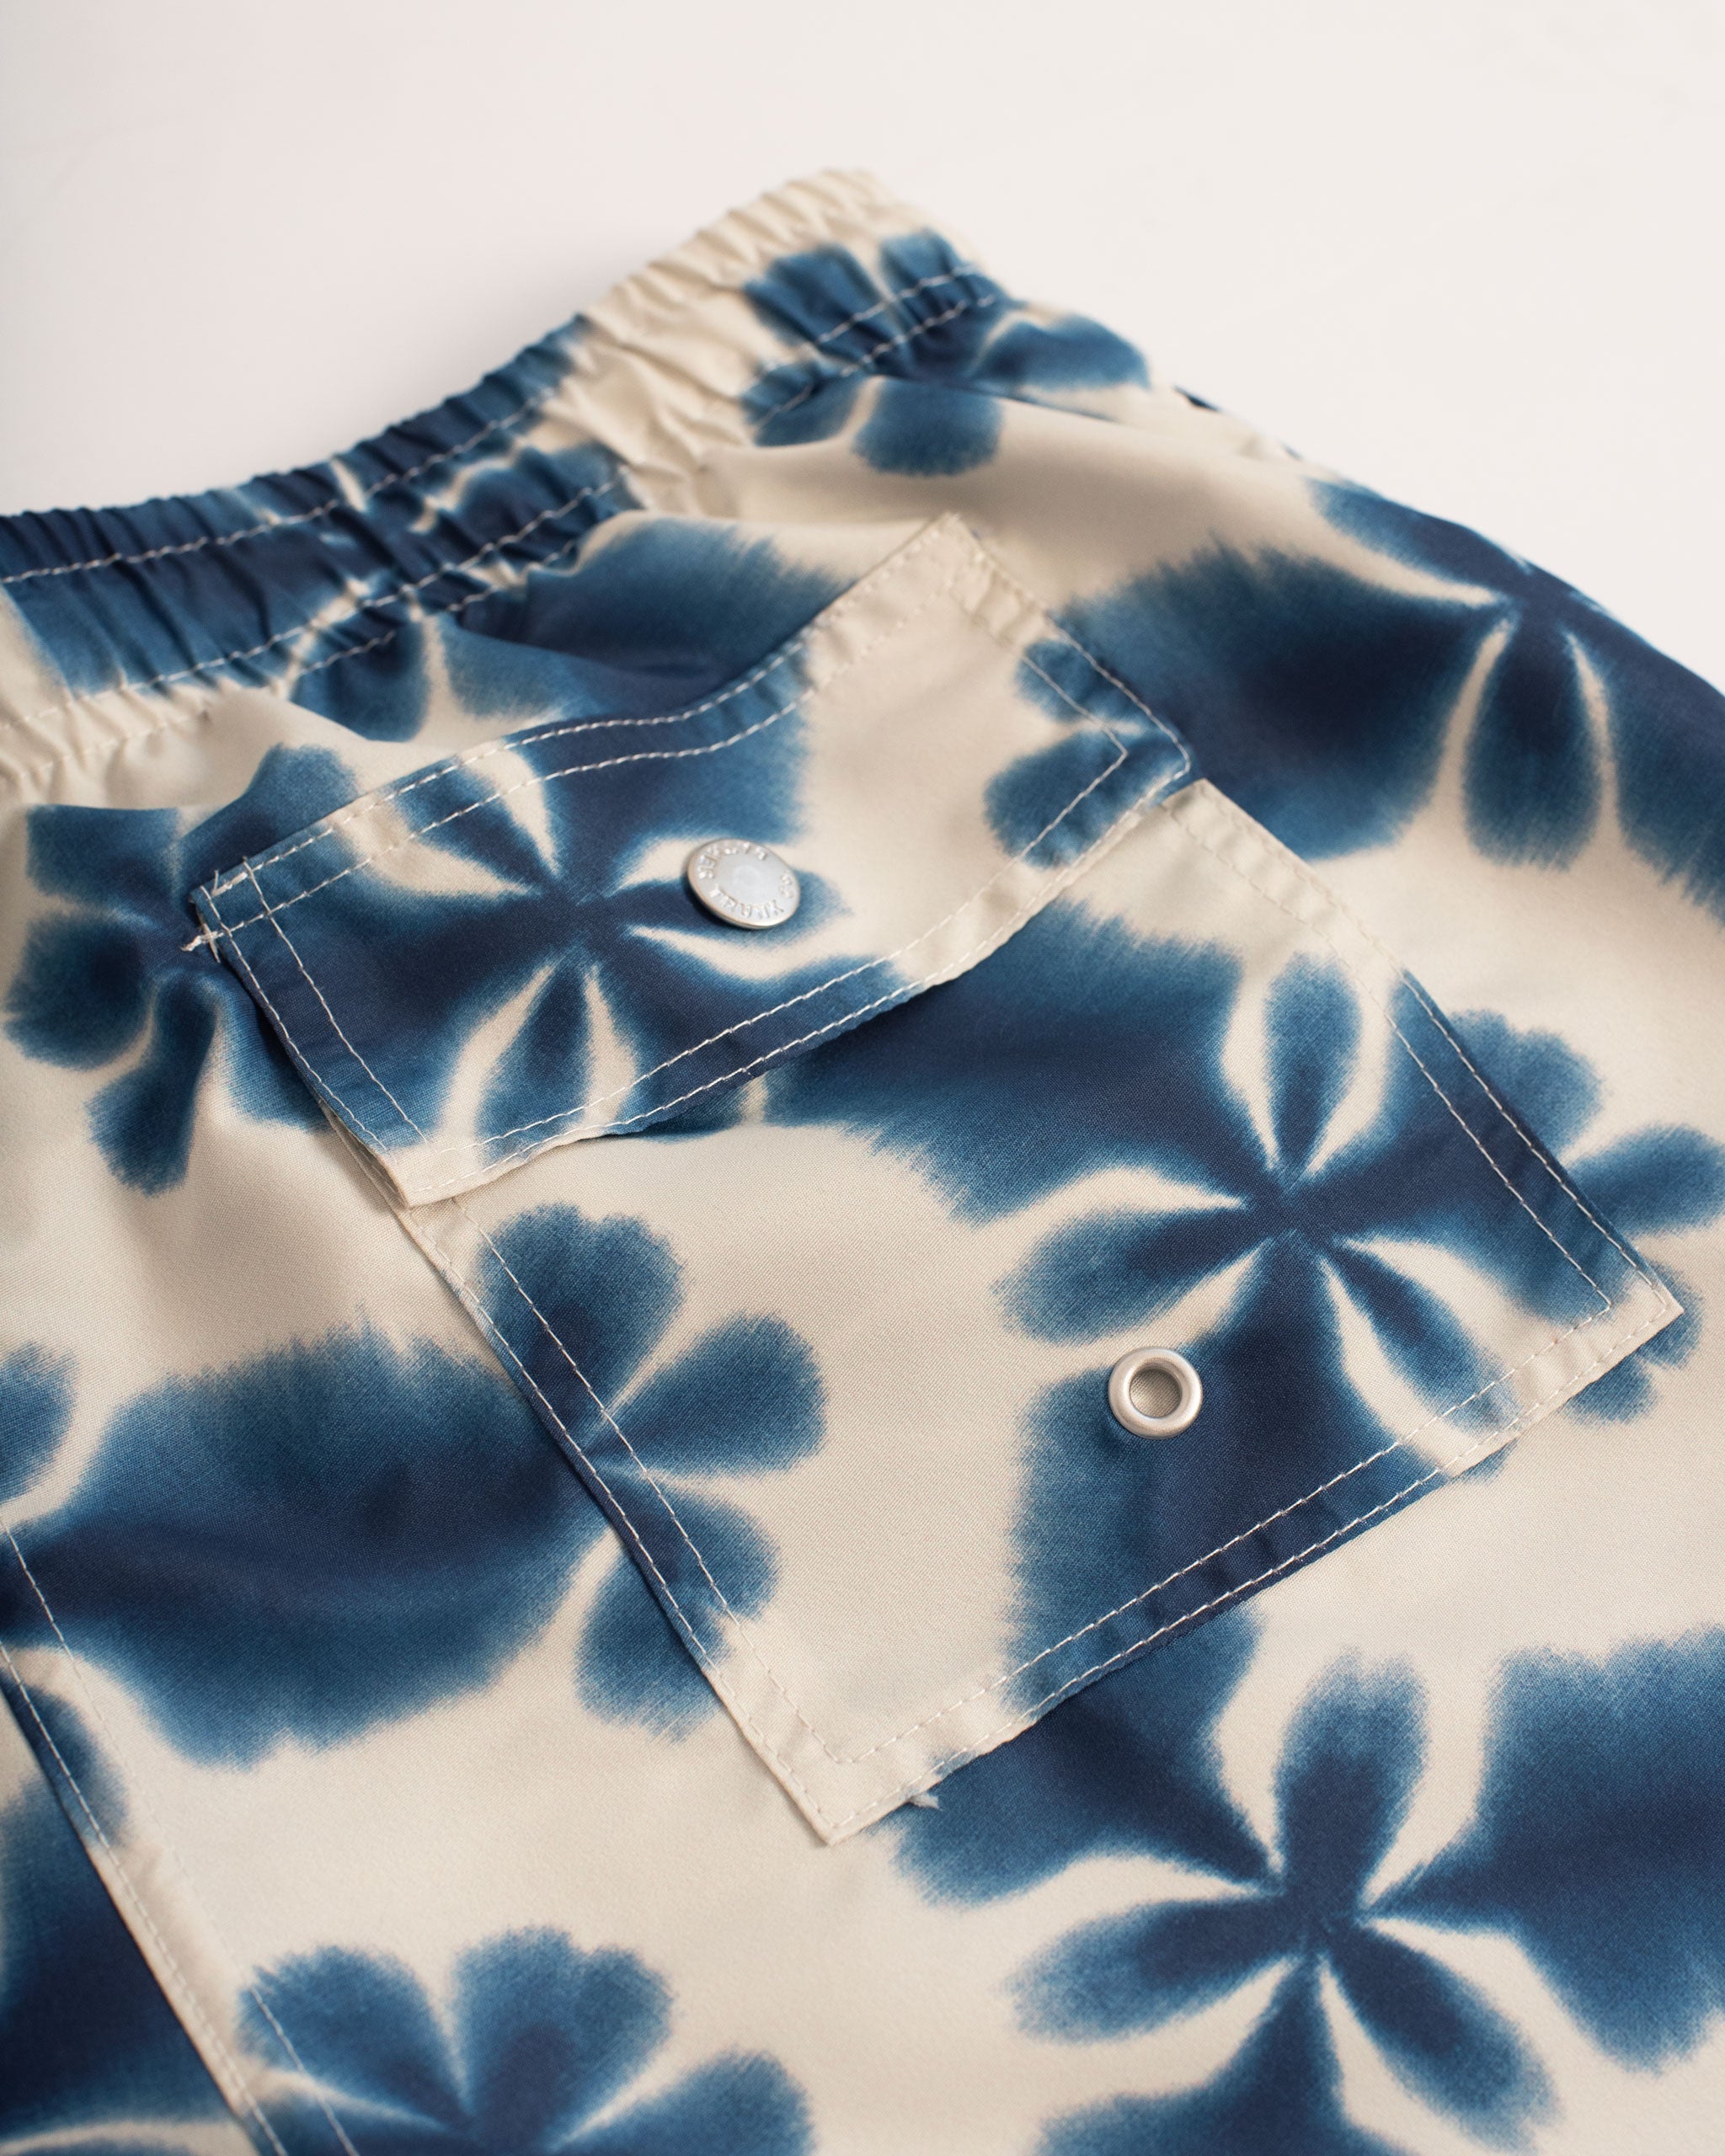 A navy swim trunk with a shibori-inspired print, similar to a kaleidoscope pattern back pocket close up